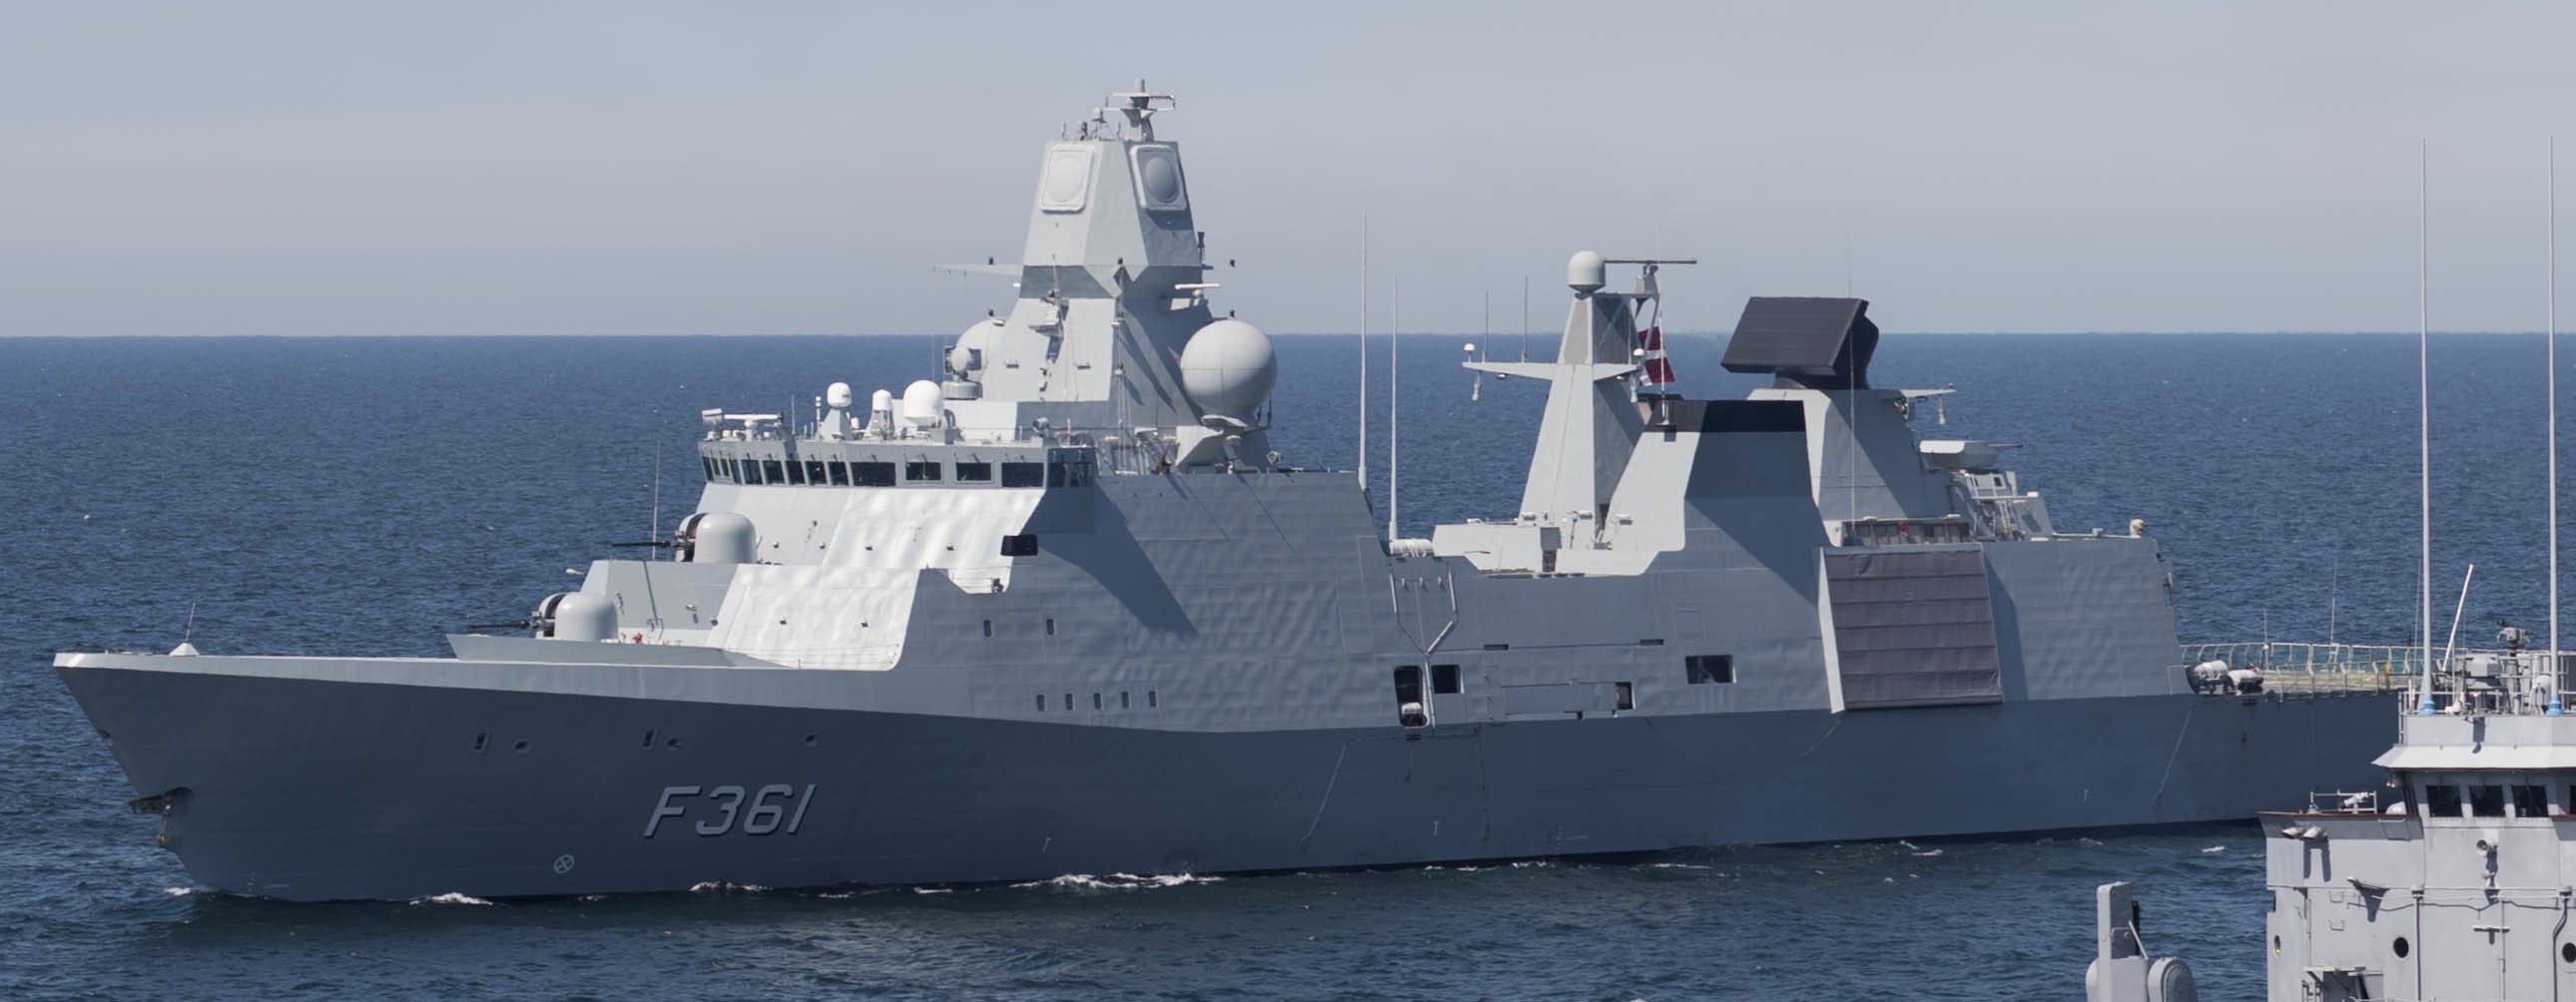 f-361 hdms iver huitfeldt class guided missile frigate ffg royal danish navy 03